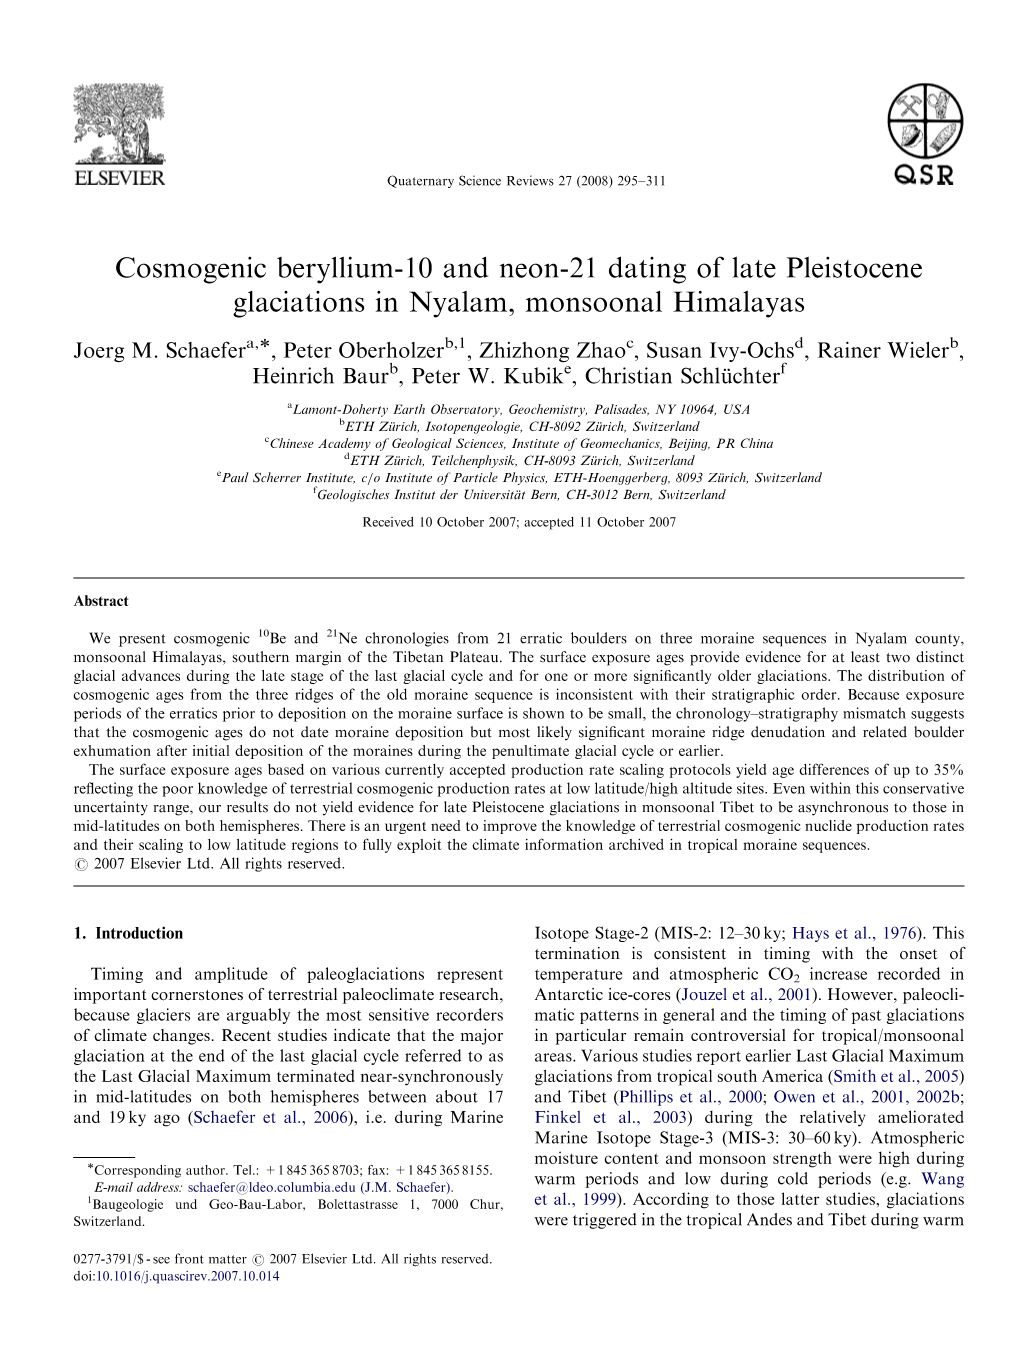 Cosmogenic Beryllium-10 and Neon-21 Dating of Late Pleistocene Glaciations in Nyalam, Monsoonal Himalayas